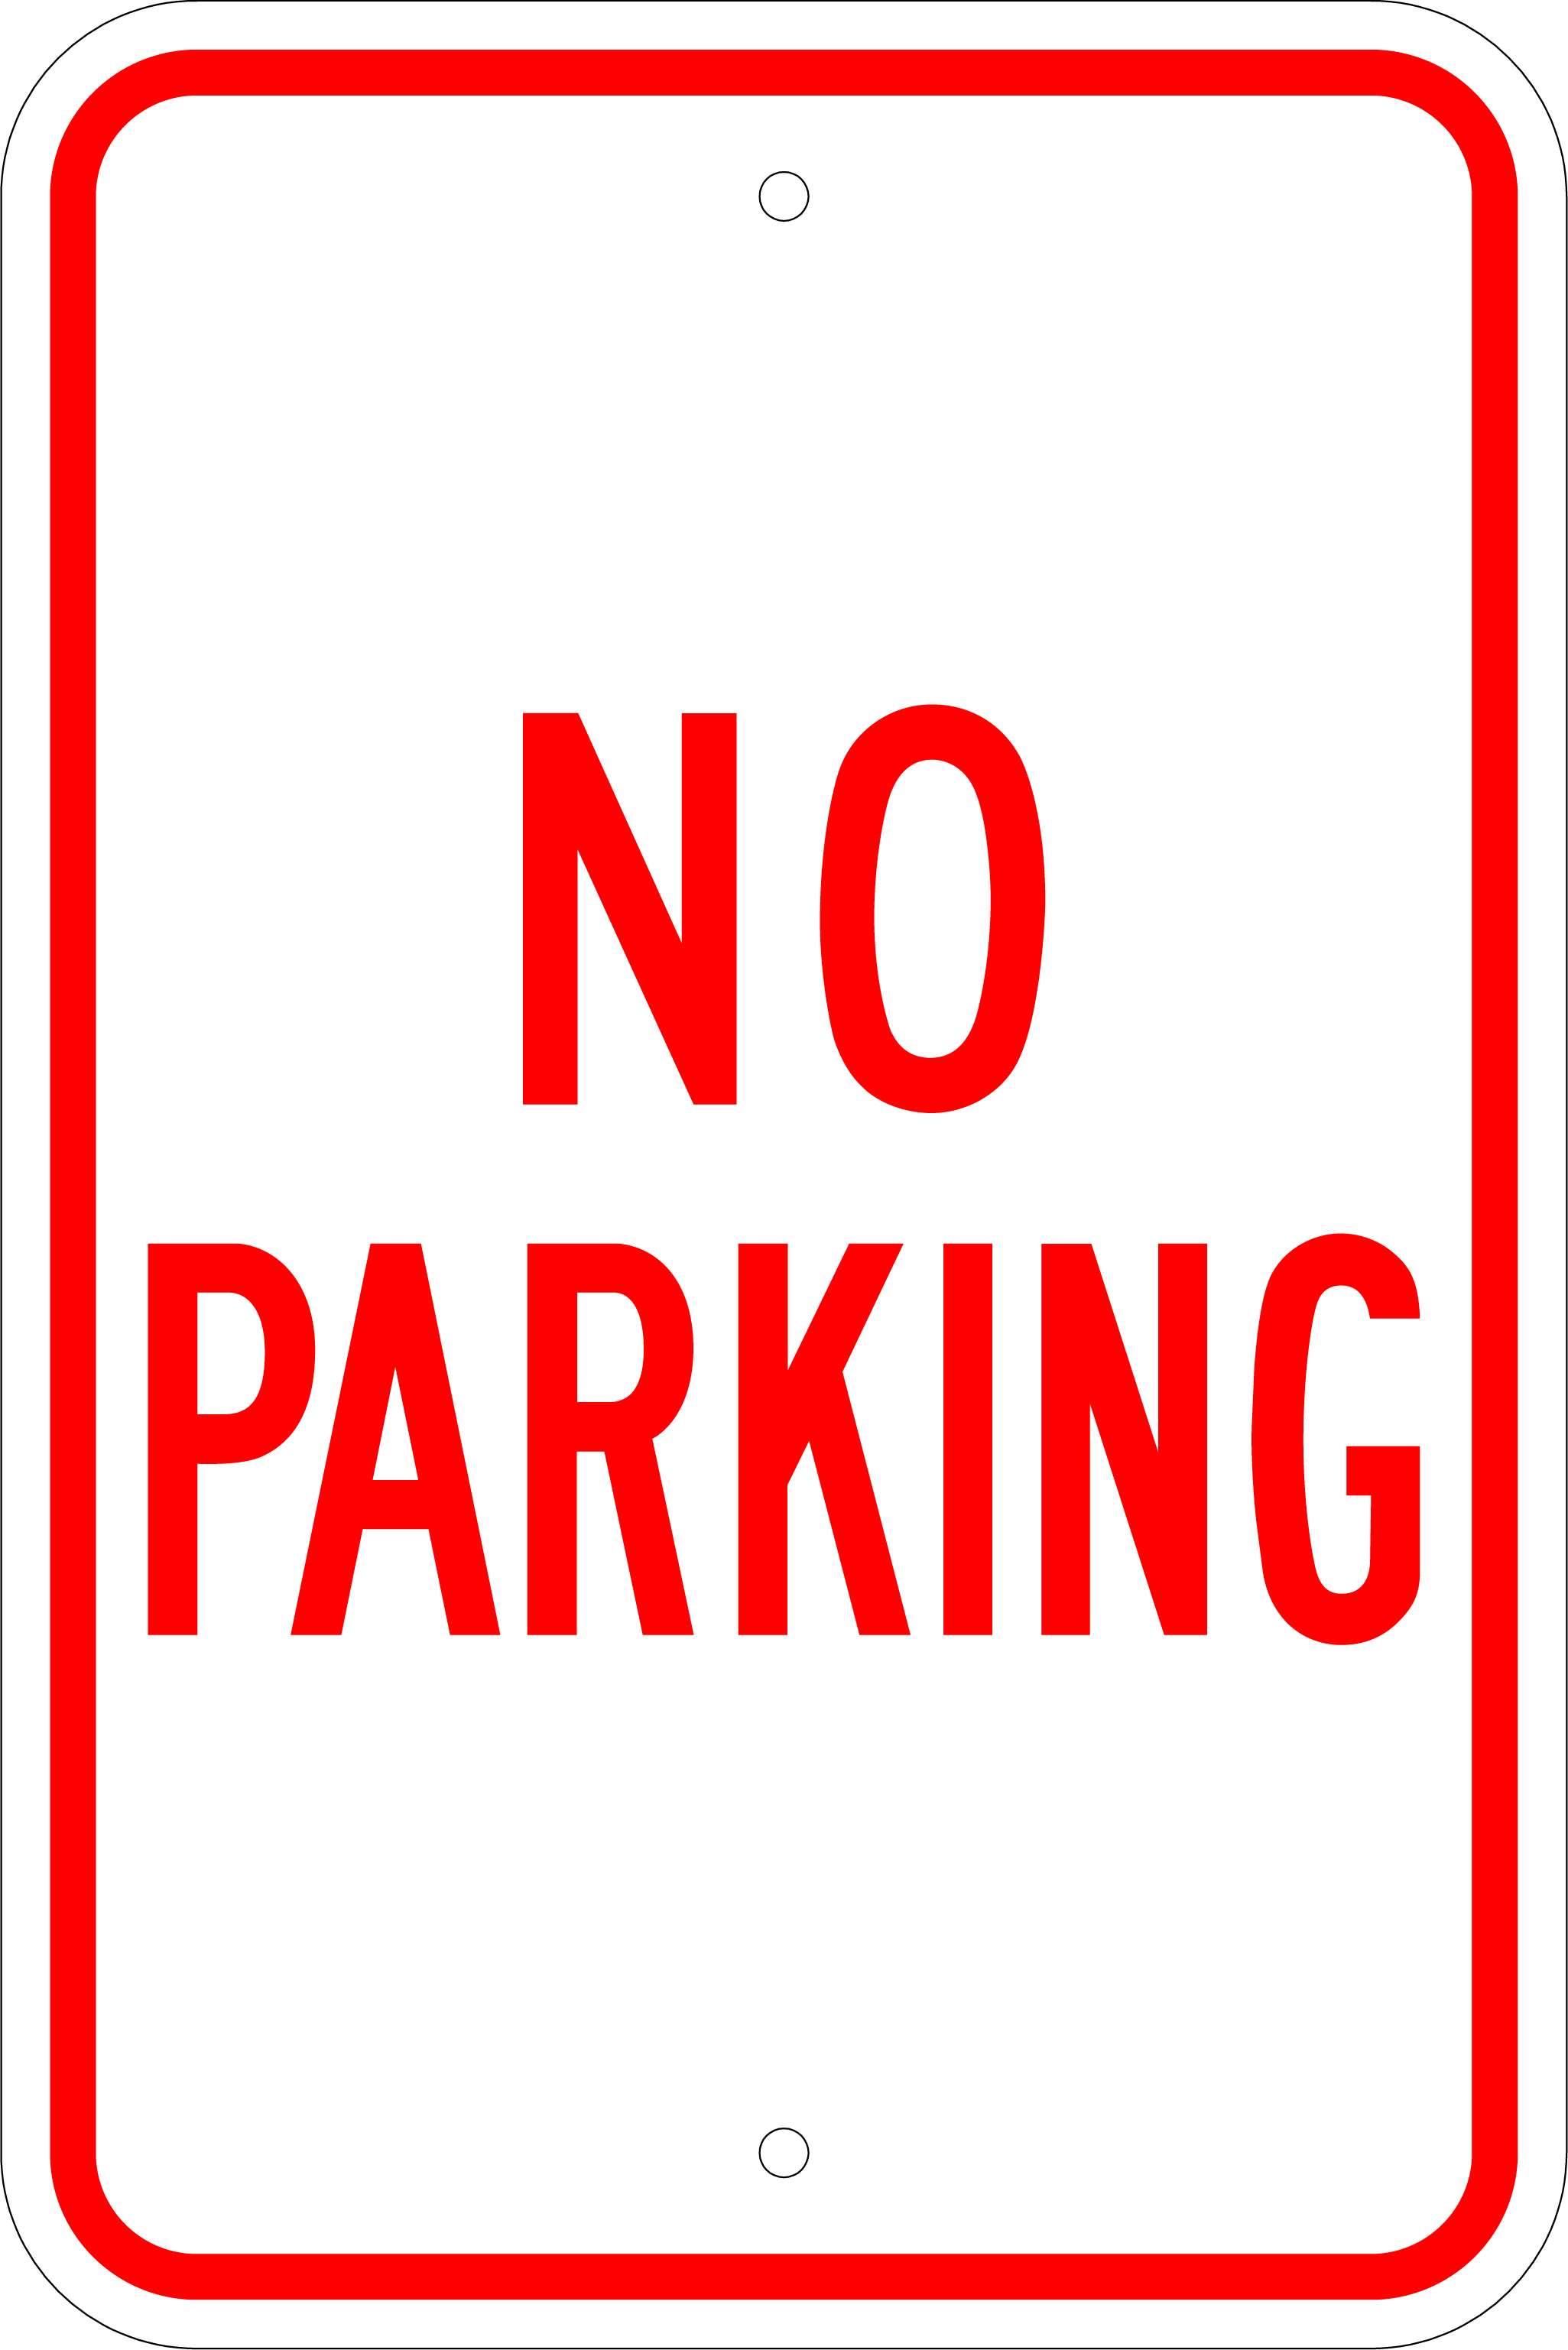 No Parking Sign Template - ClipArt Best